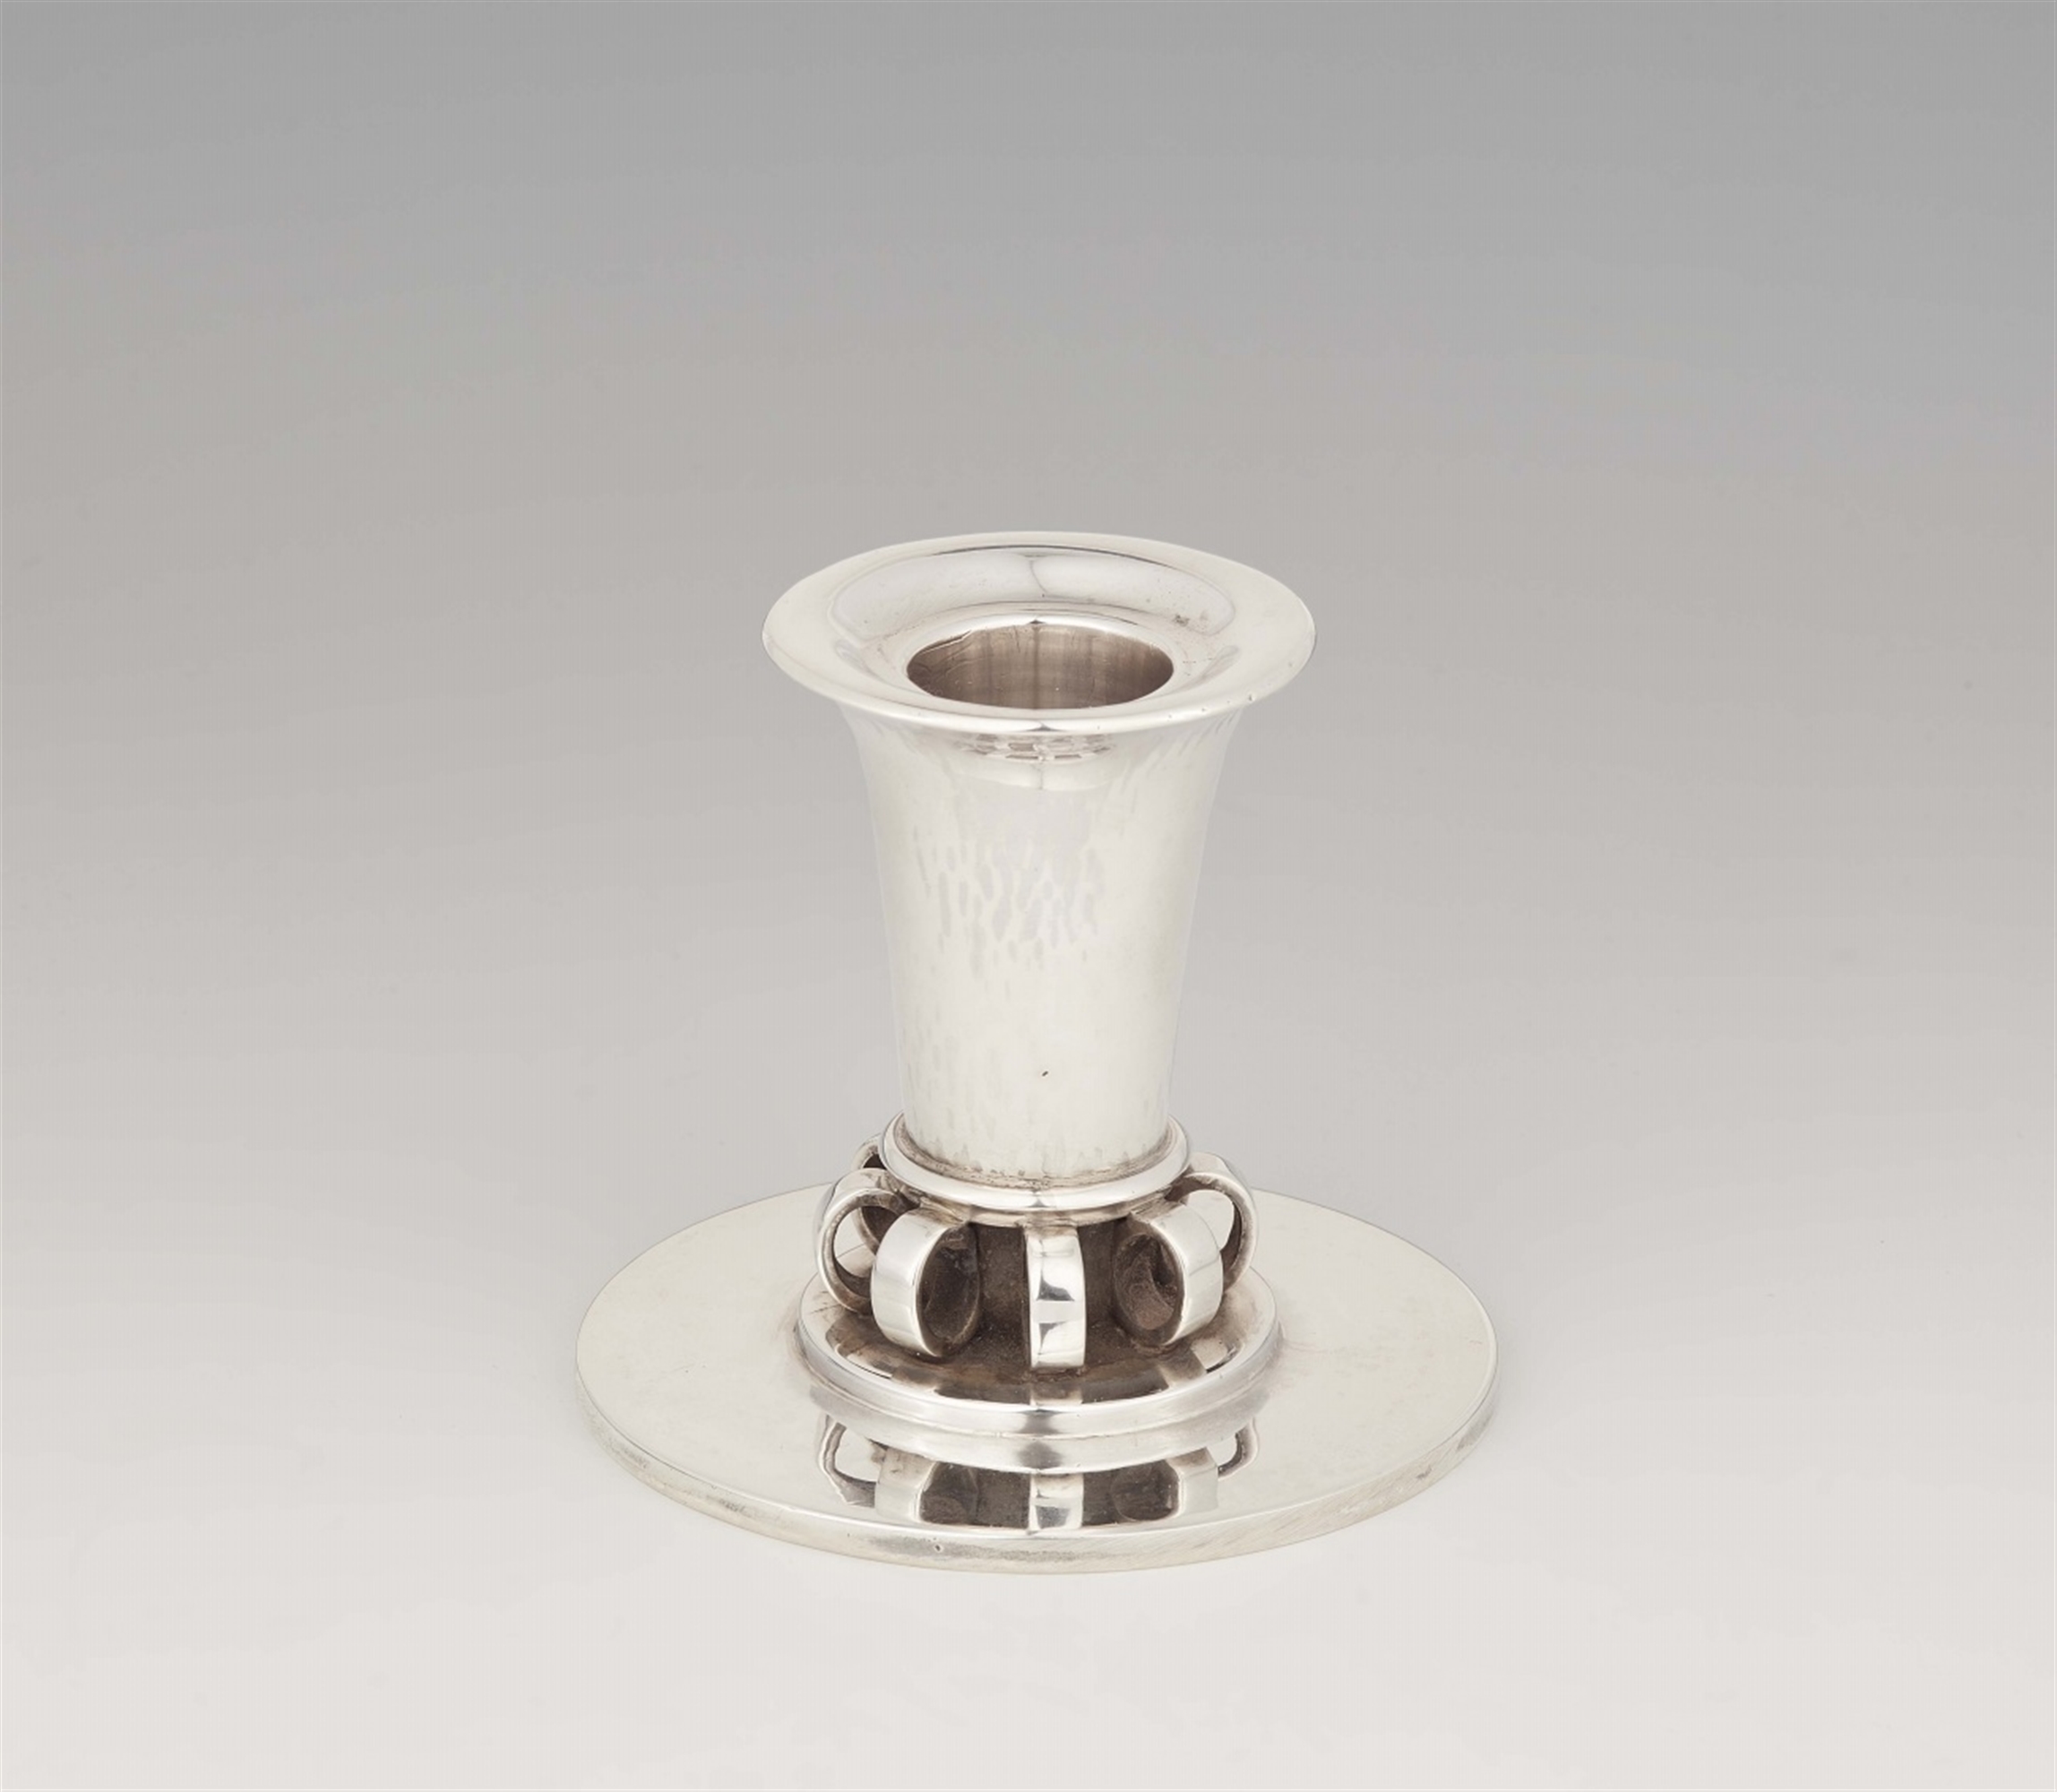 A Copenhagen silver candlestick by Georg Jensen, model no. 539